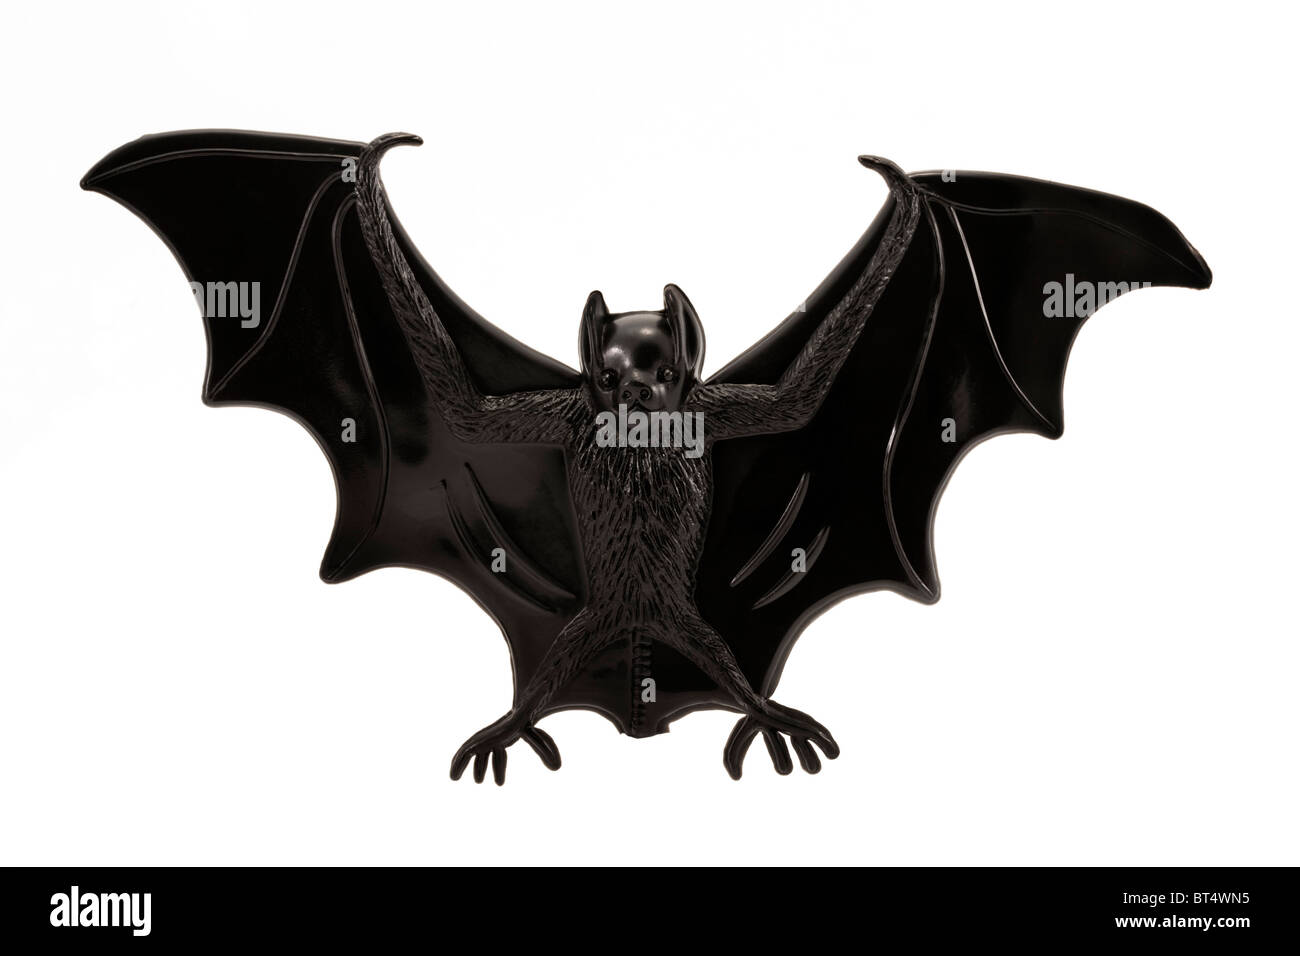 Juguete de murciélago fotografías e imágenes de alta resolución - Alamy